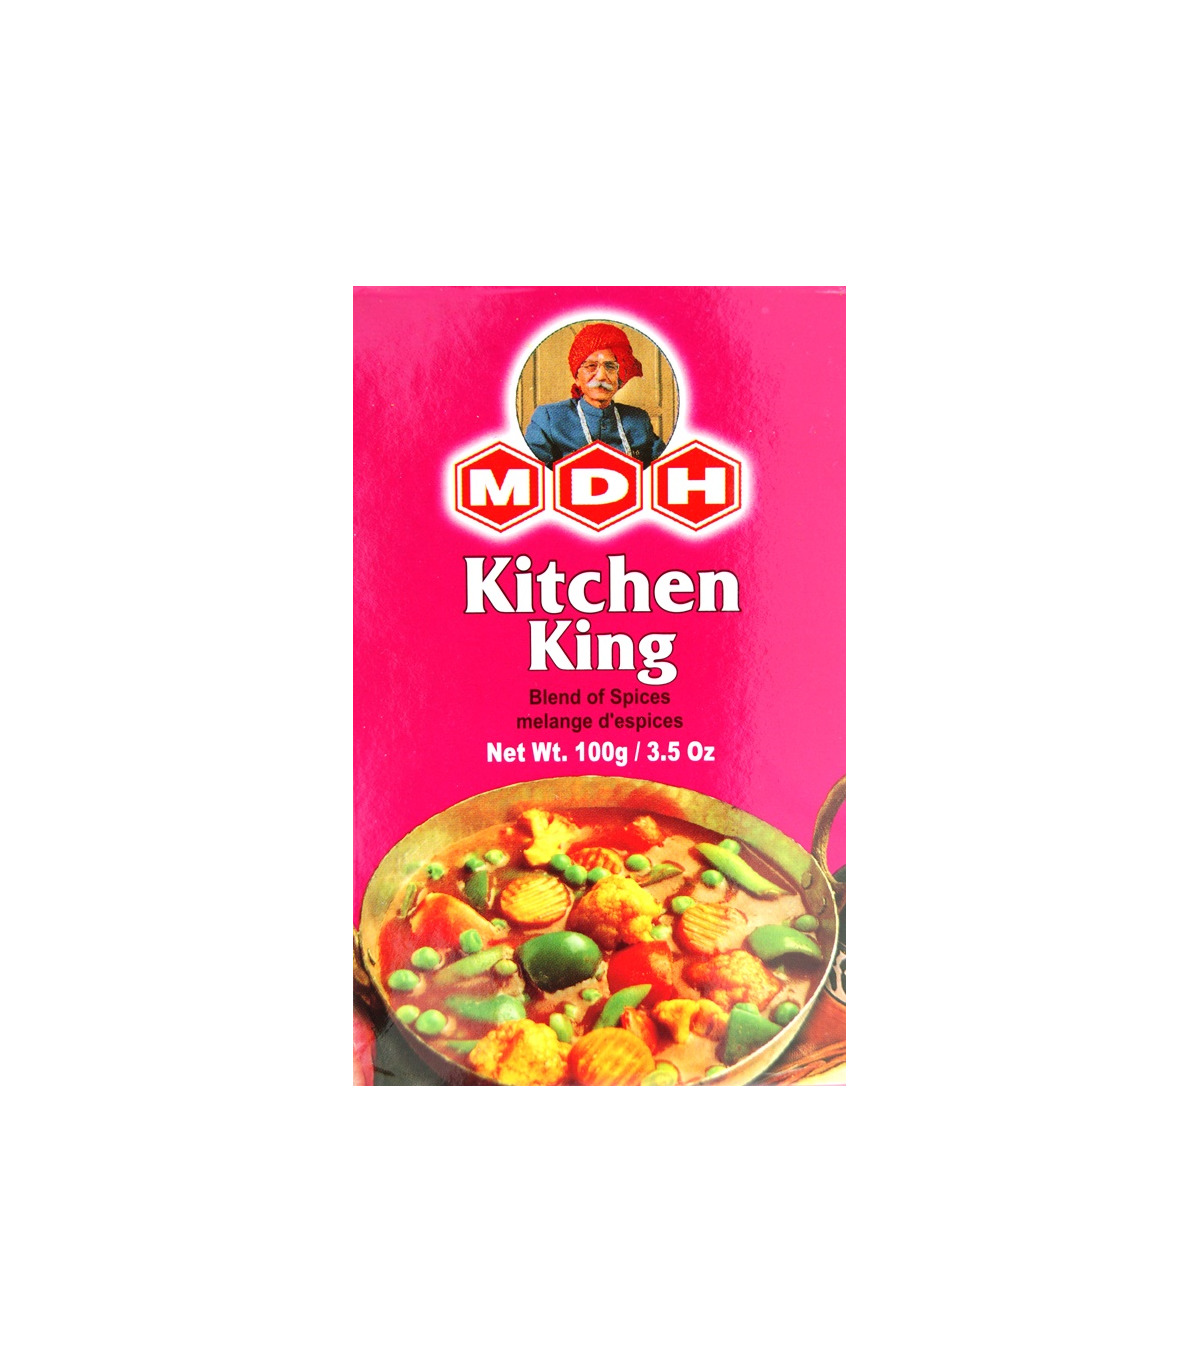 Buy MDH Kitchen King online Germany